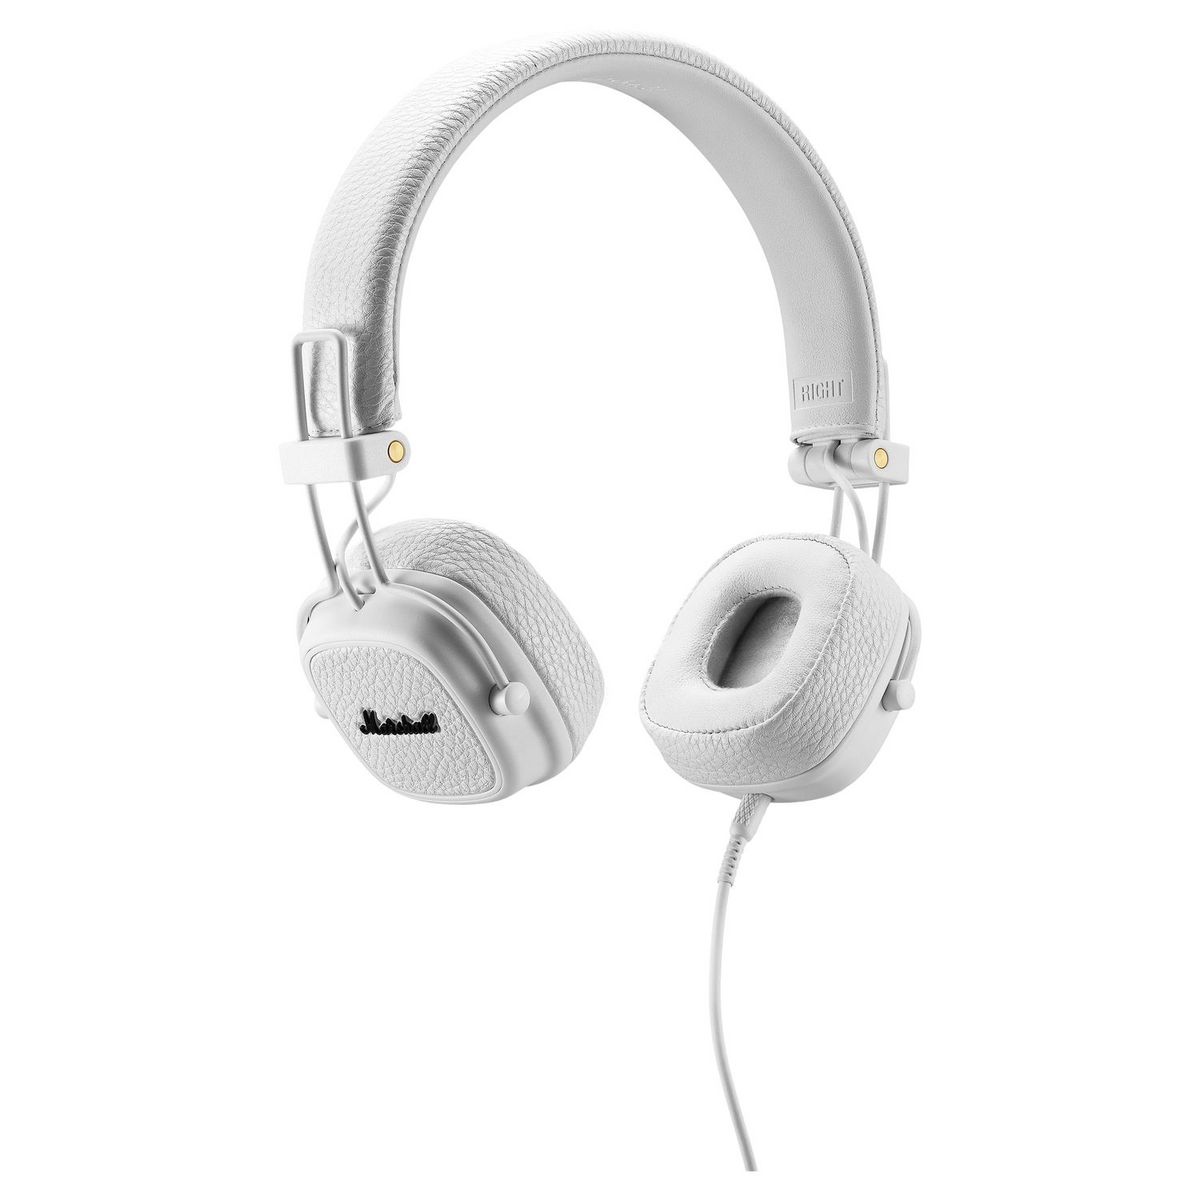 MARSHALL Casque audio Bluetooth et filaire - Major III - Blanc pas cher 